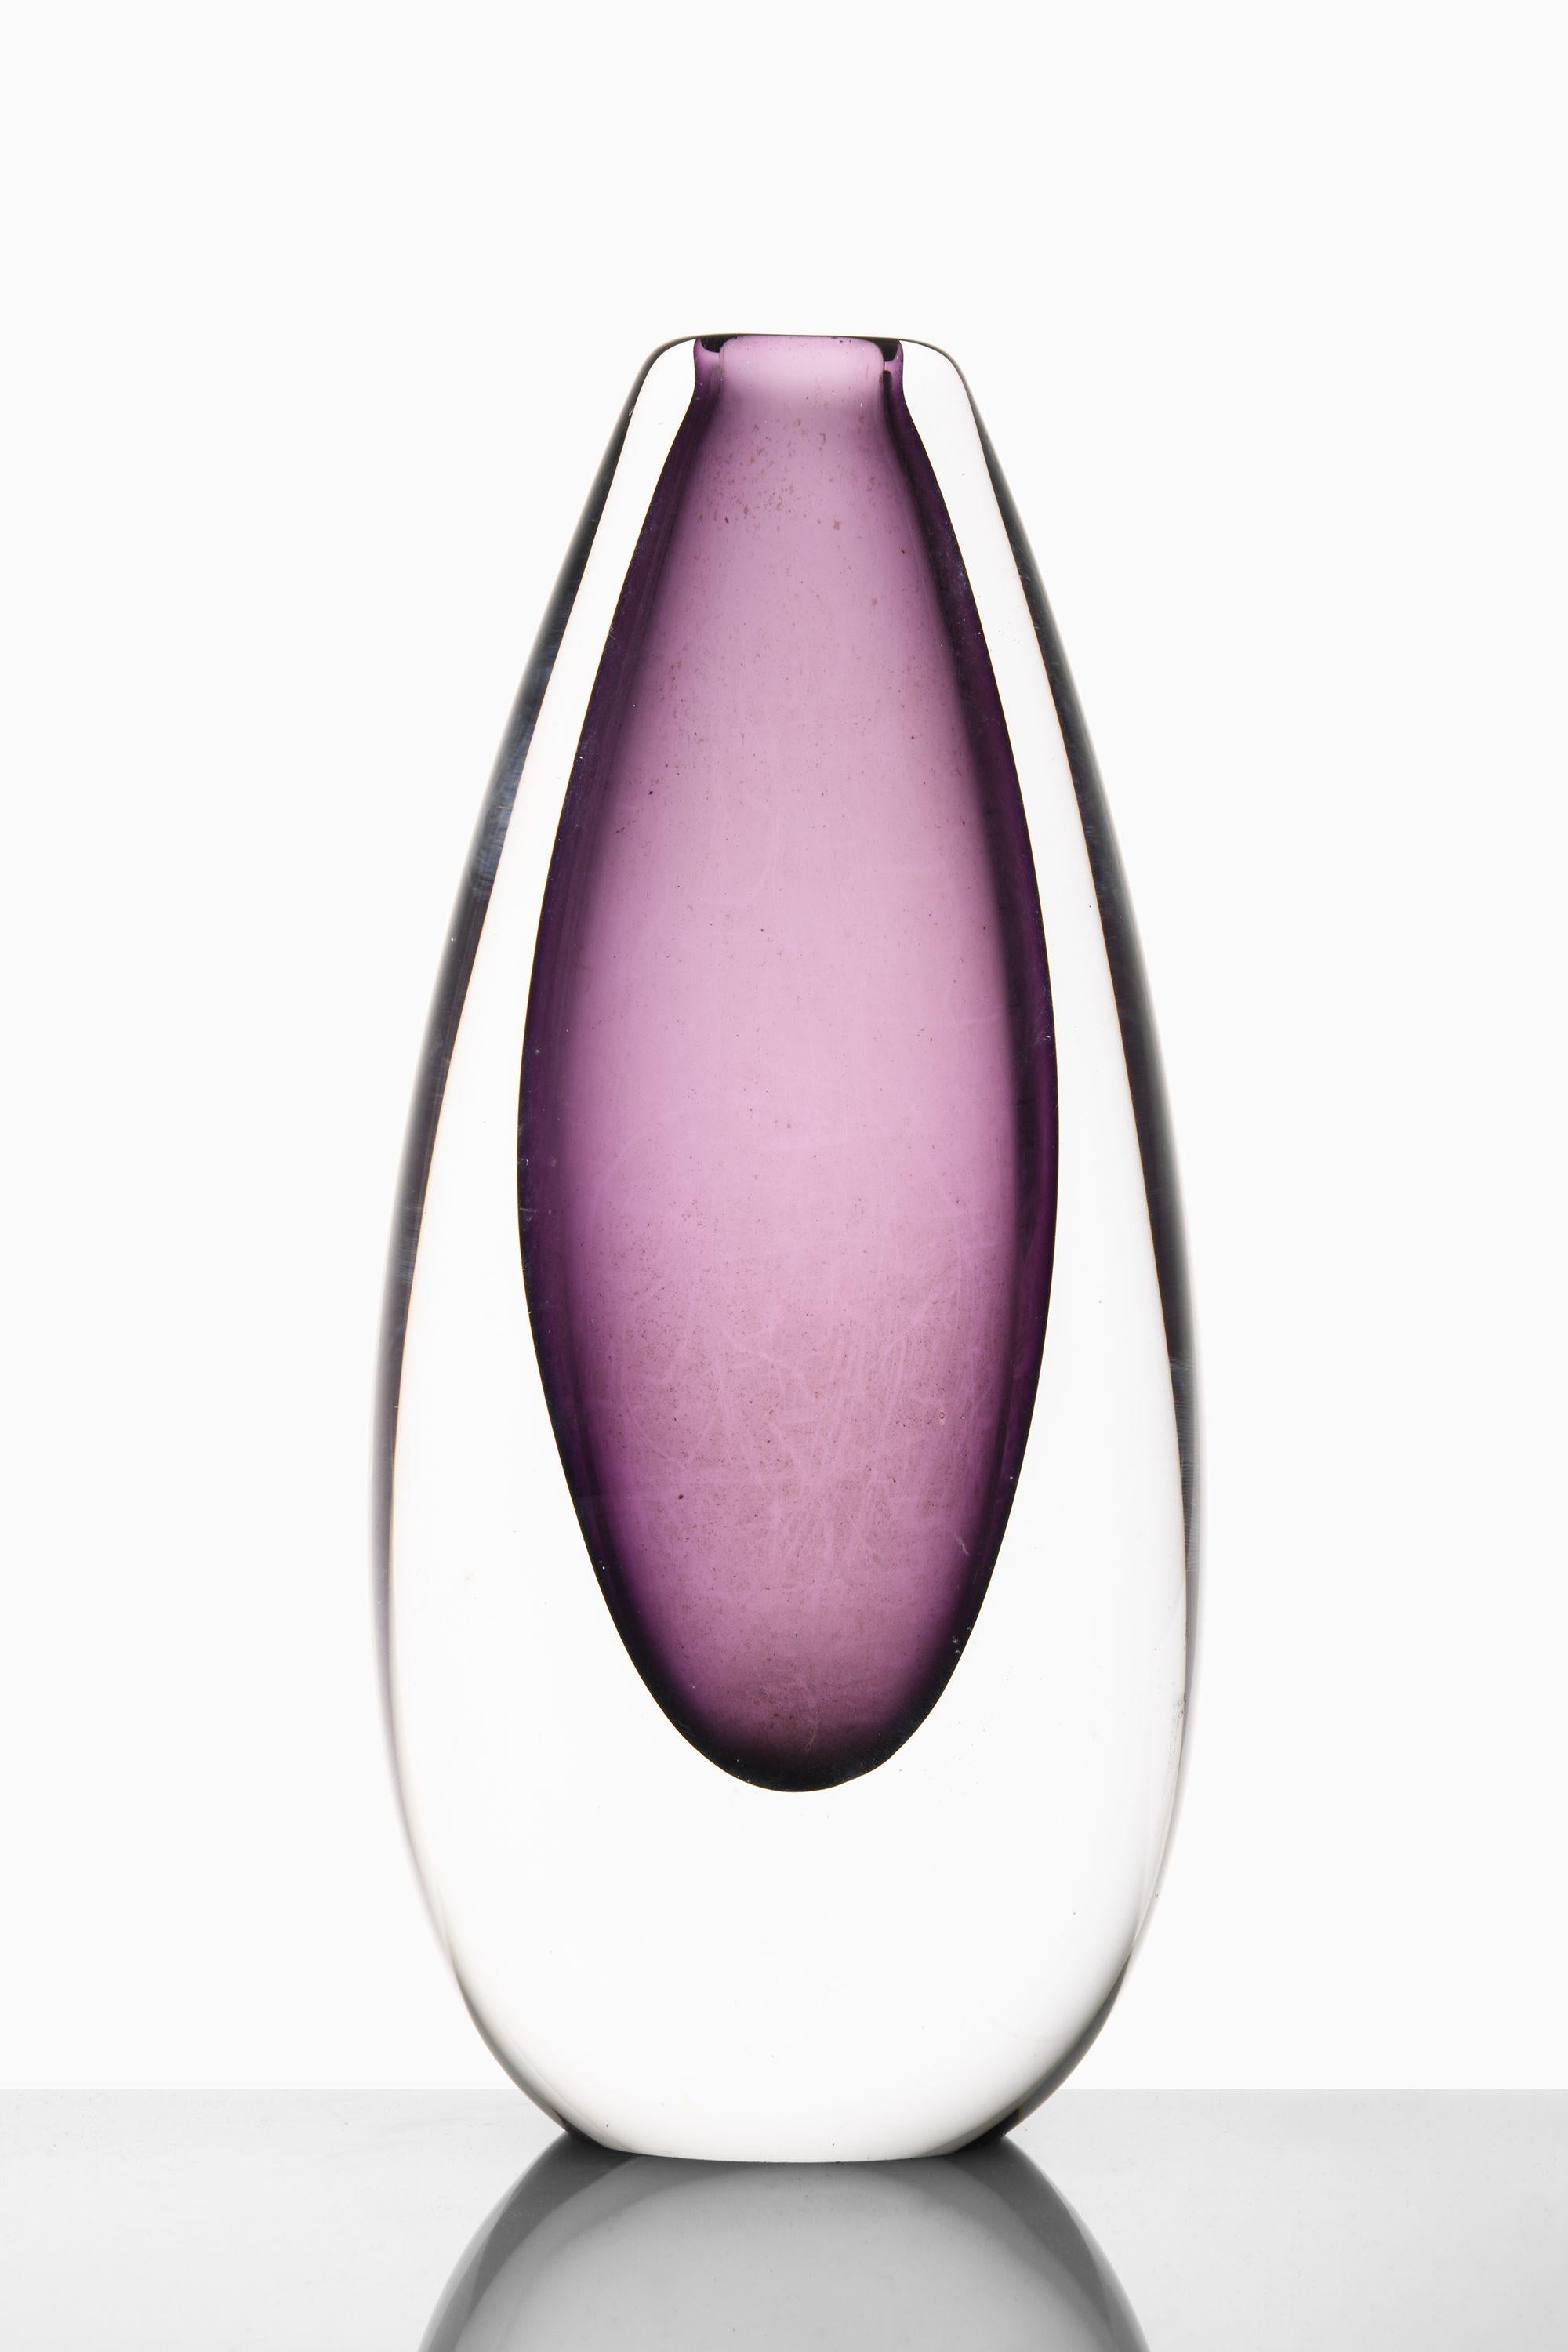 Swedish Glass Vase in Purple, 1950's For Sale